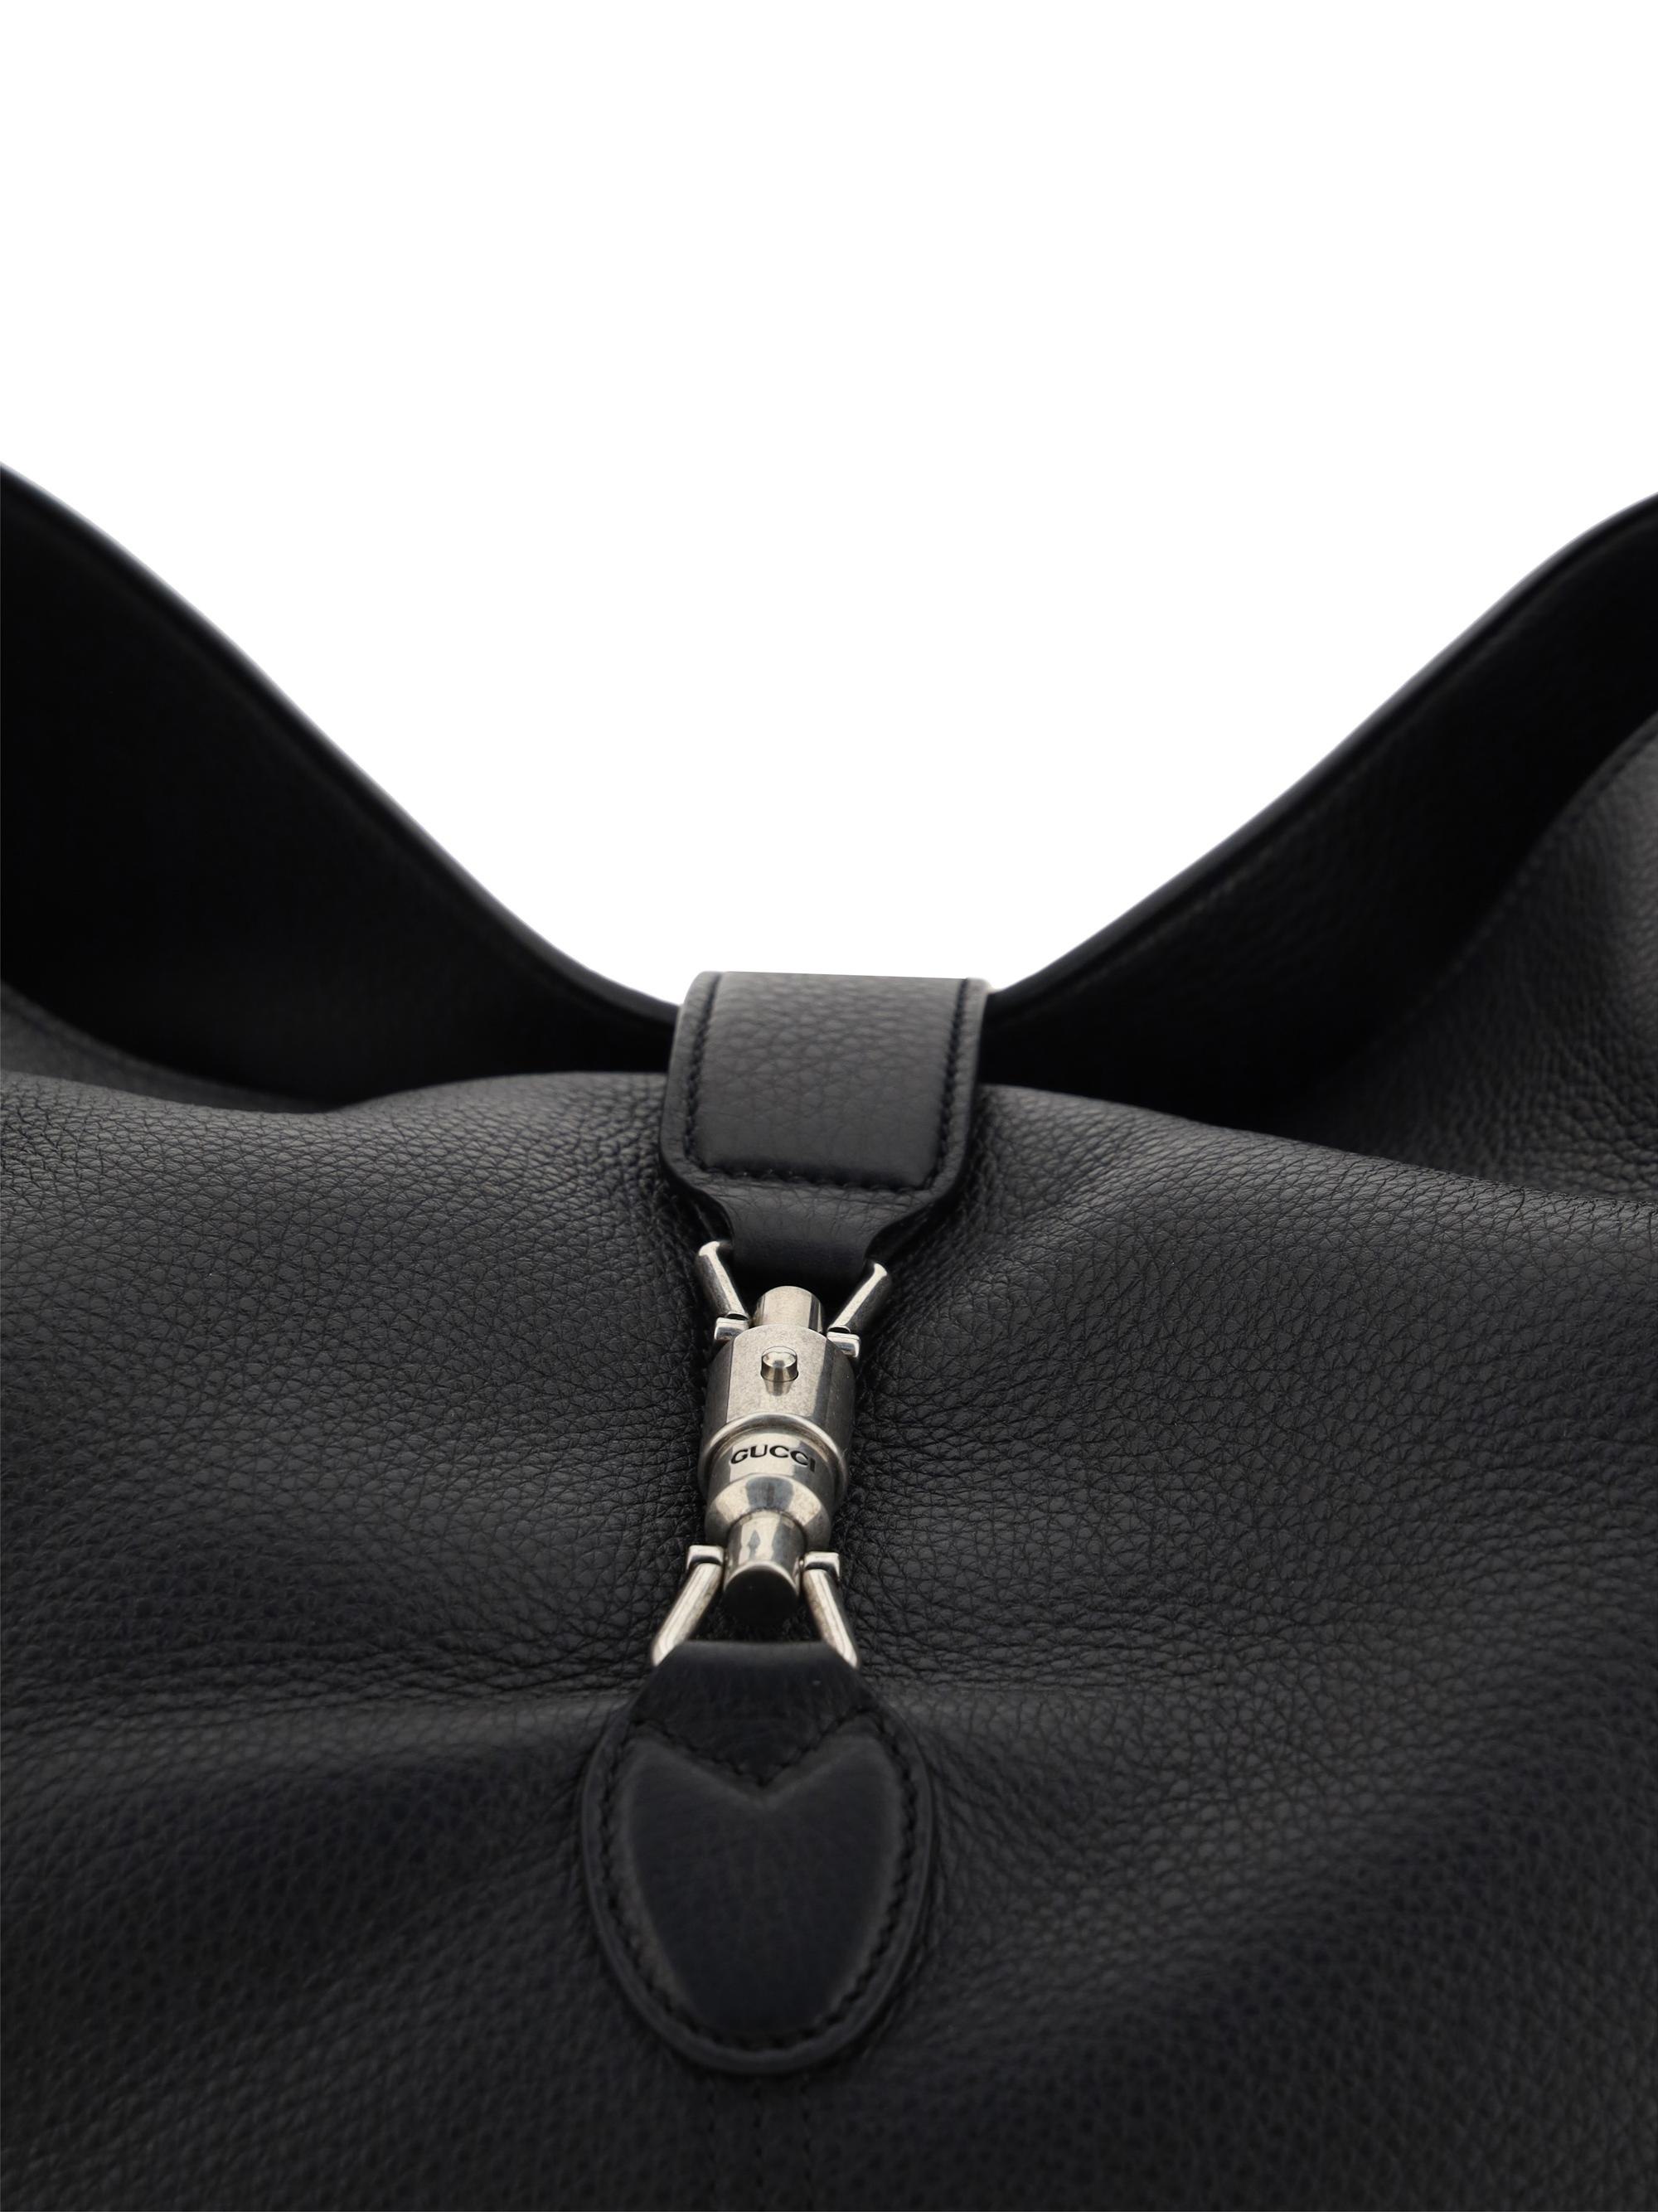 Black Jackie 1961 medium leather bag, Gucci